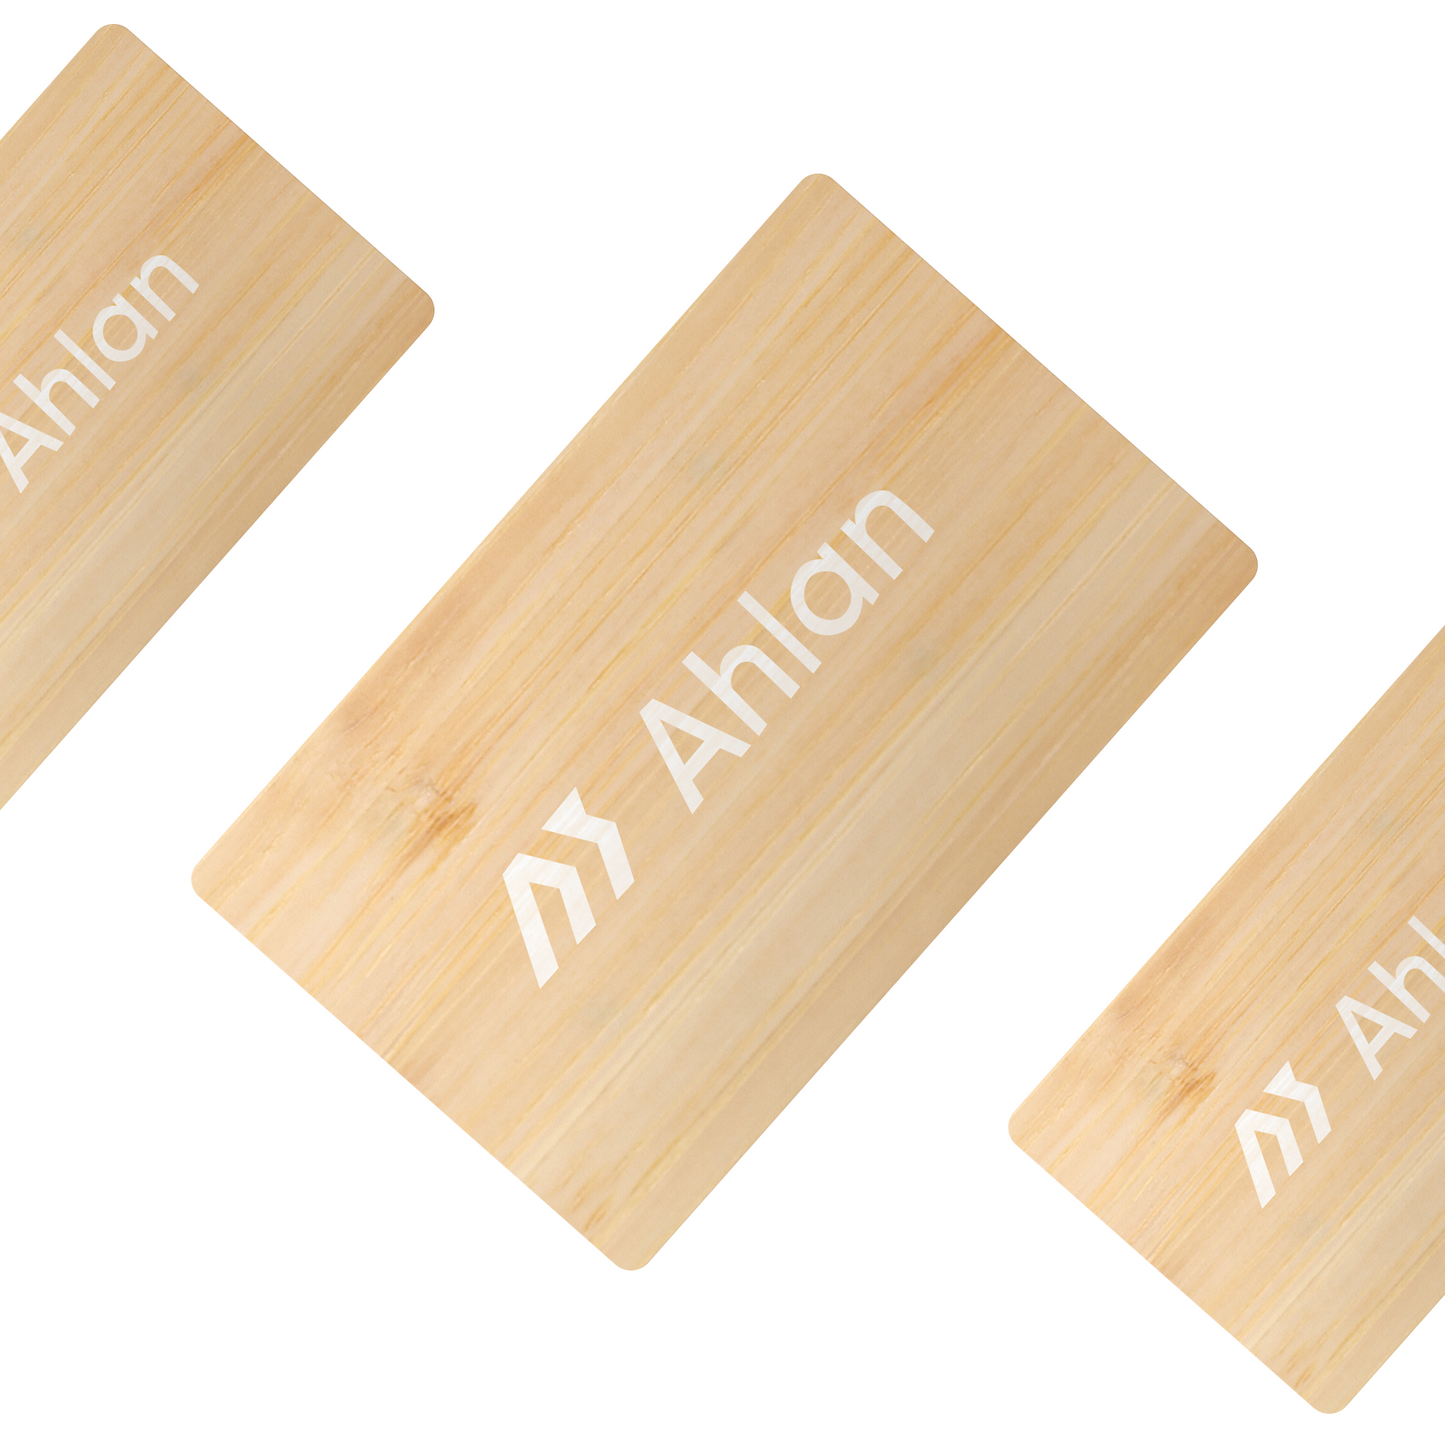 Ahlan Wood Plus NFC Business Card